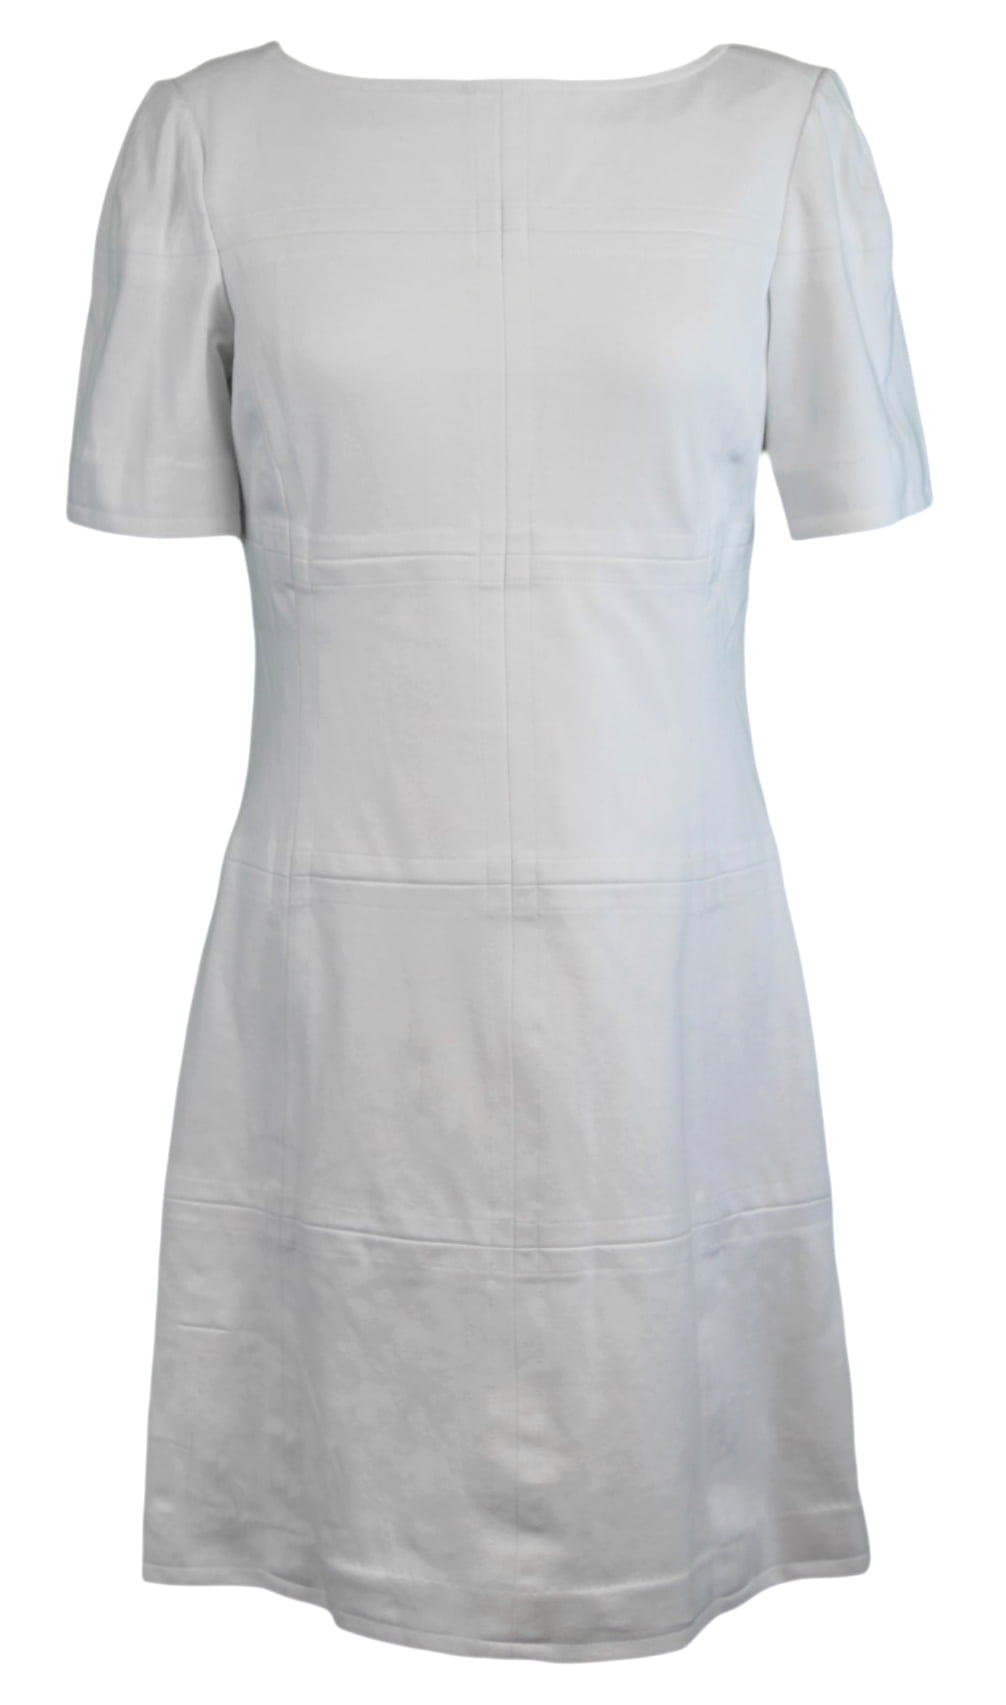 OLIAN Maternity Women's White Tie Neck Colorblock Empire Waist Dress $133 NWT 